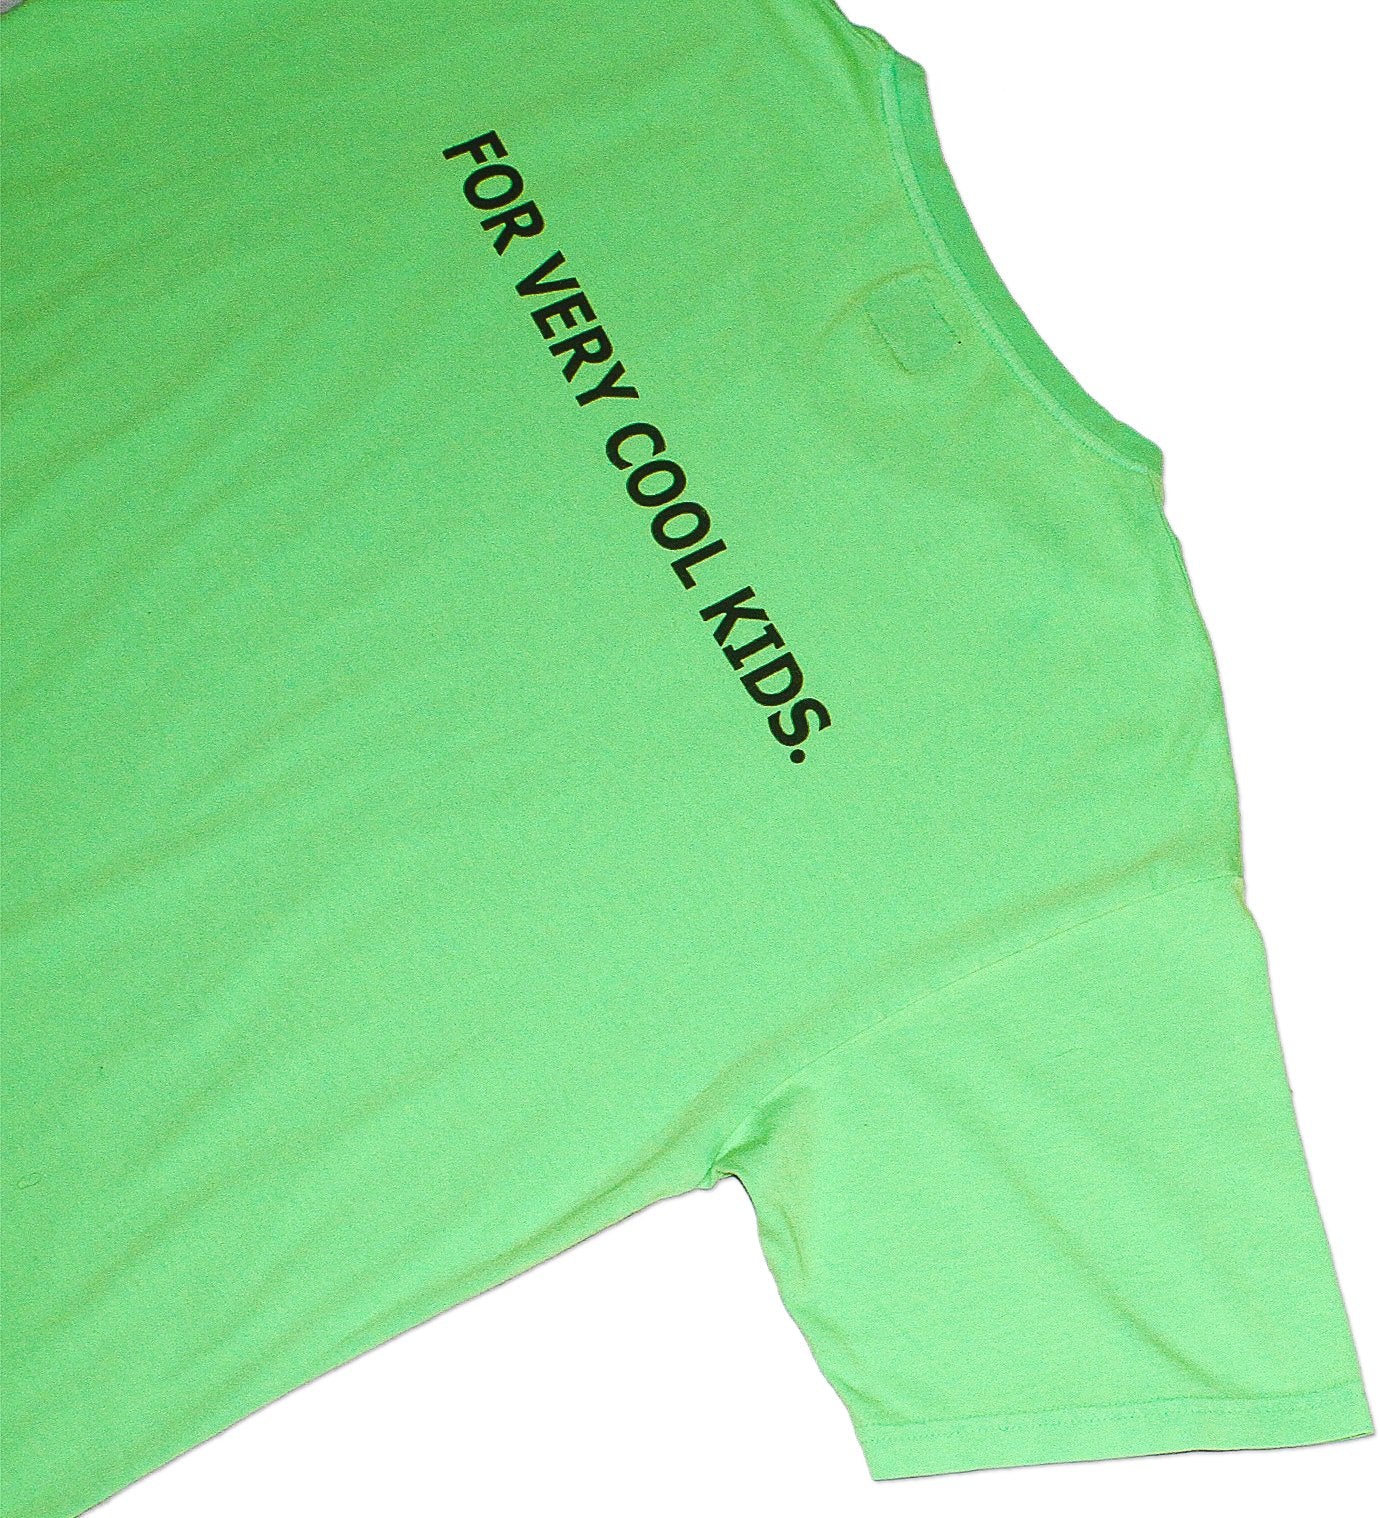 tshirt - skate - streetwear - cool - lime green - motto - citadium - mrcnoir -fvck - forverycoolkids - hologram clothing